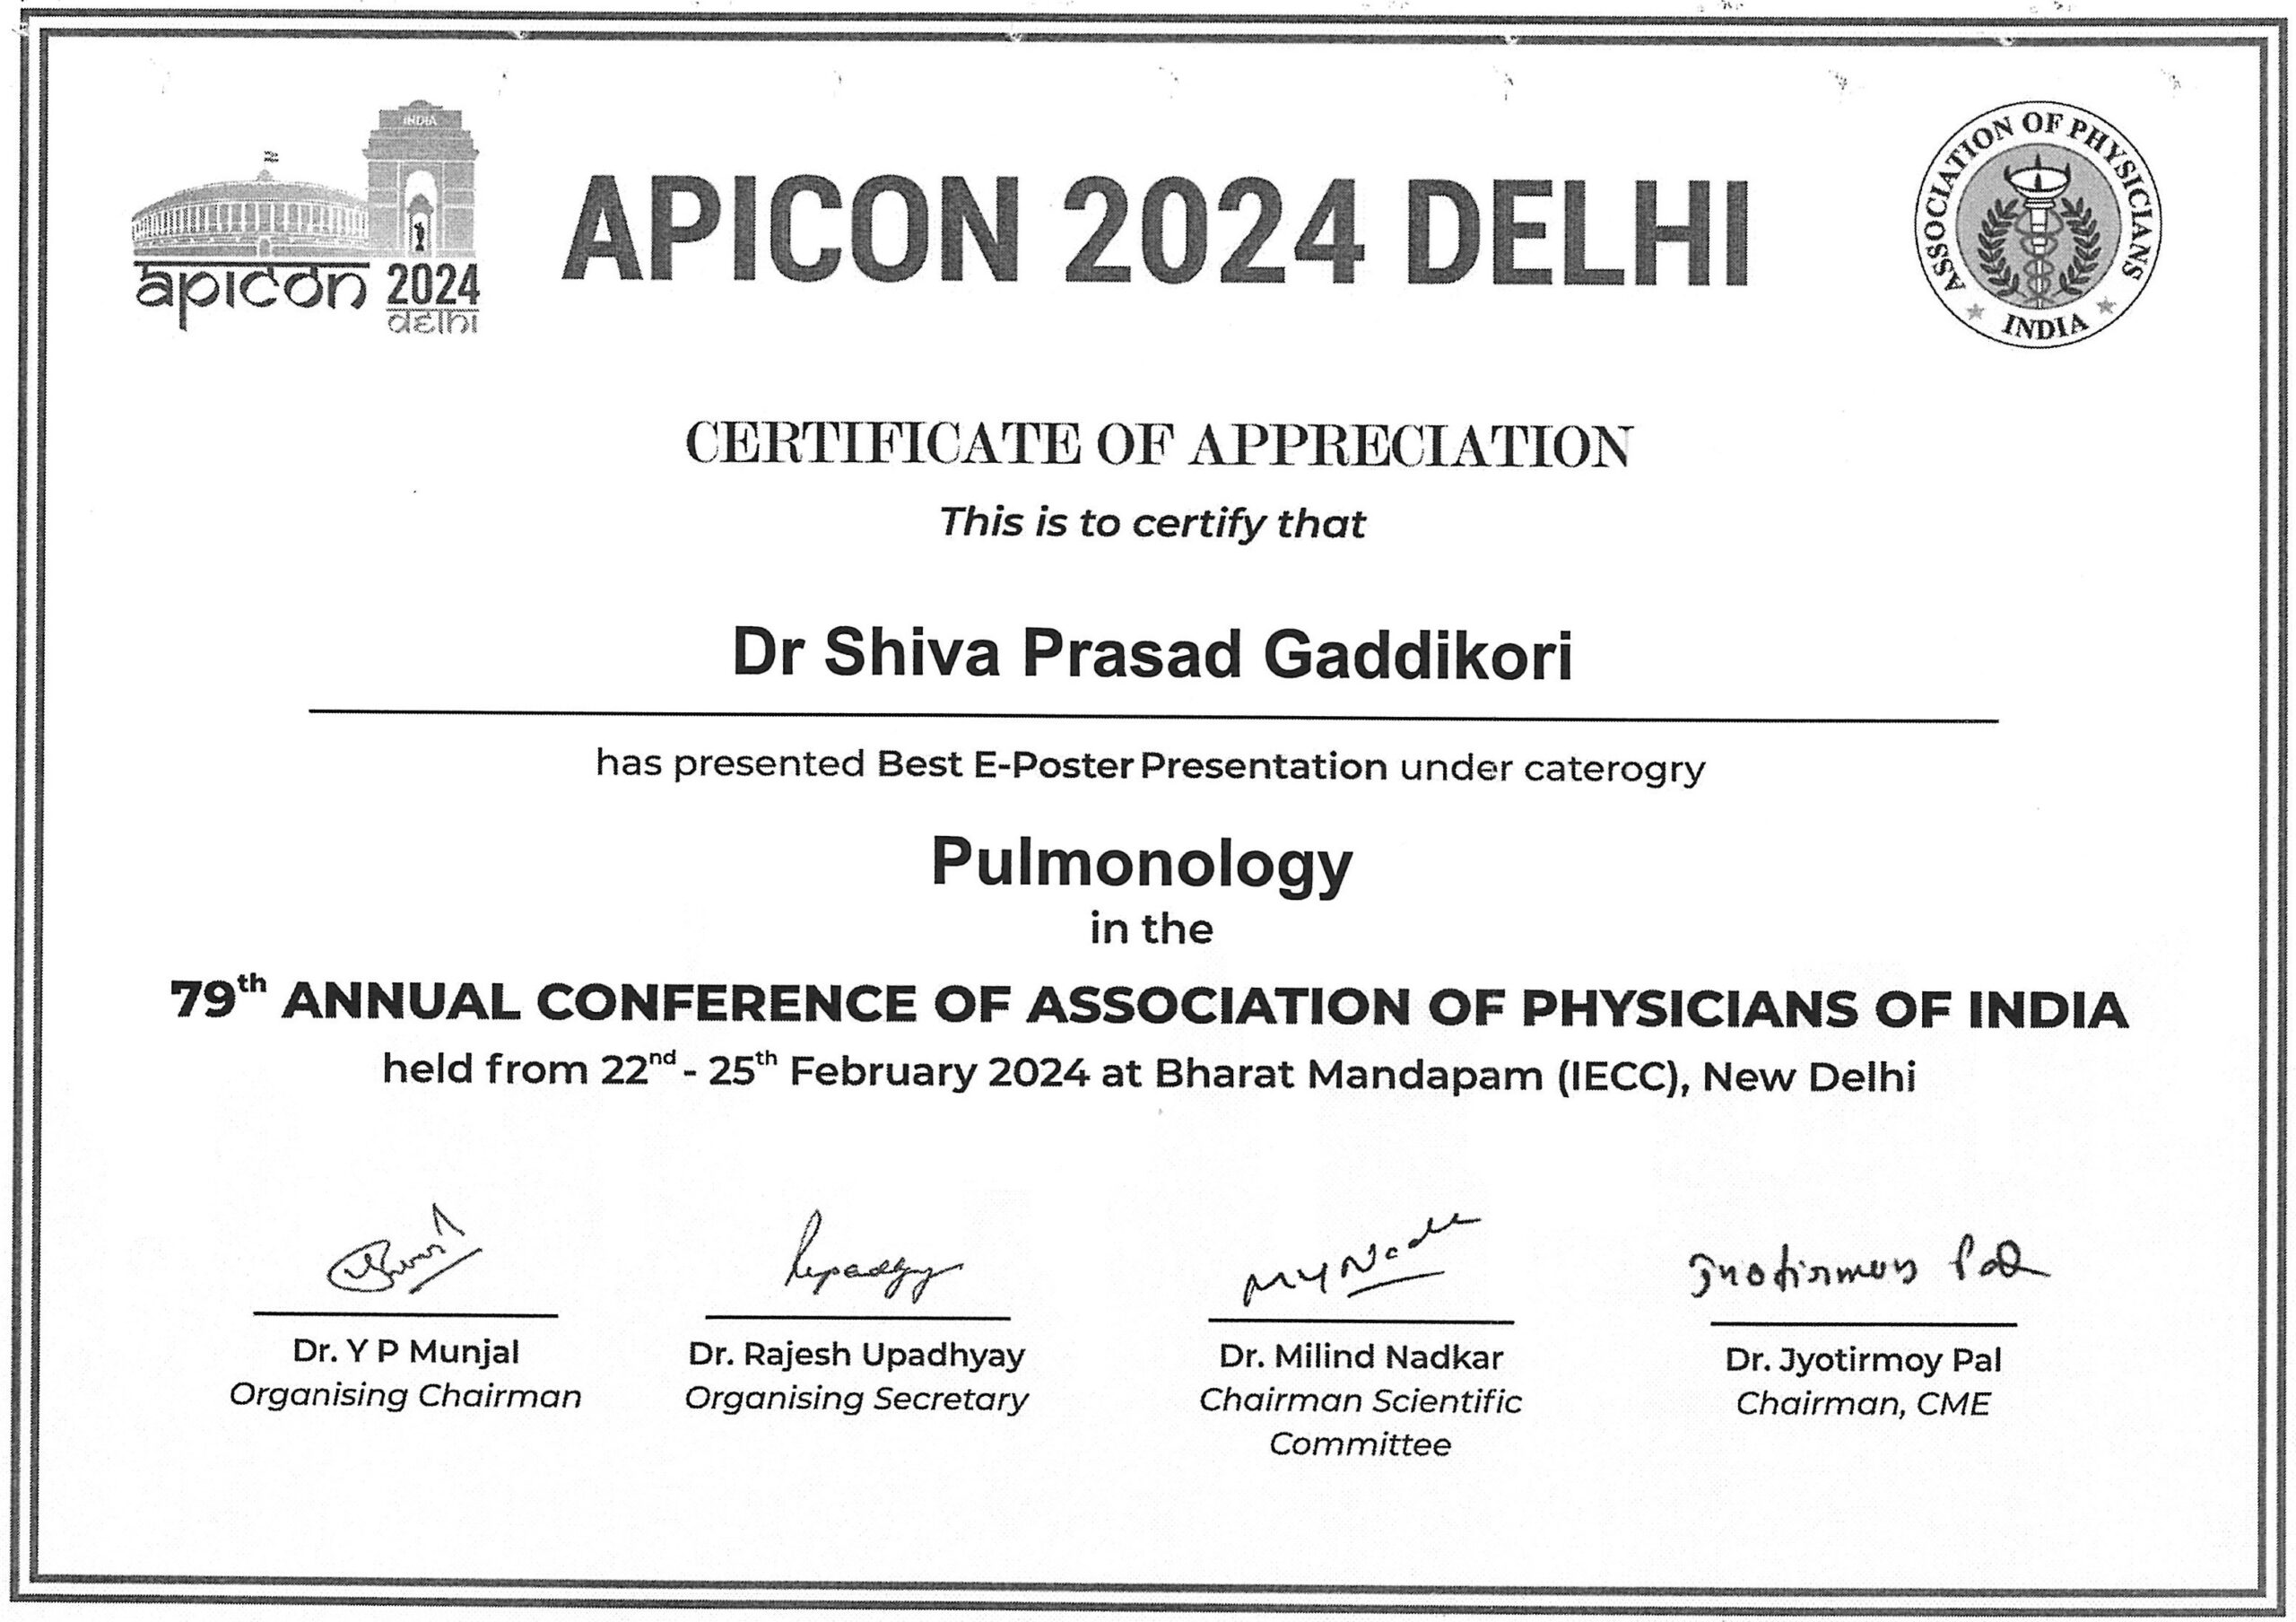 Dr Shivaprasad Gaddikeri has received a merit award for E – Poster presentation i.e “APICON 2024